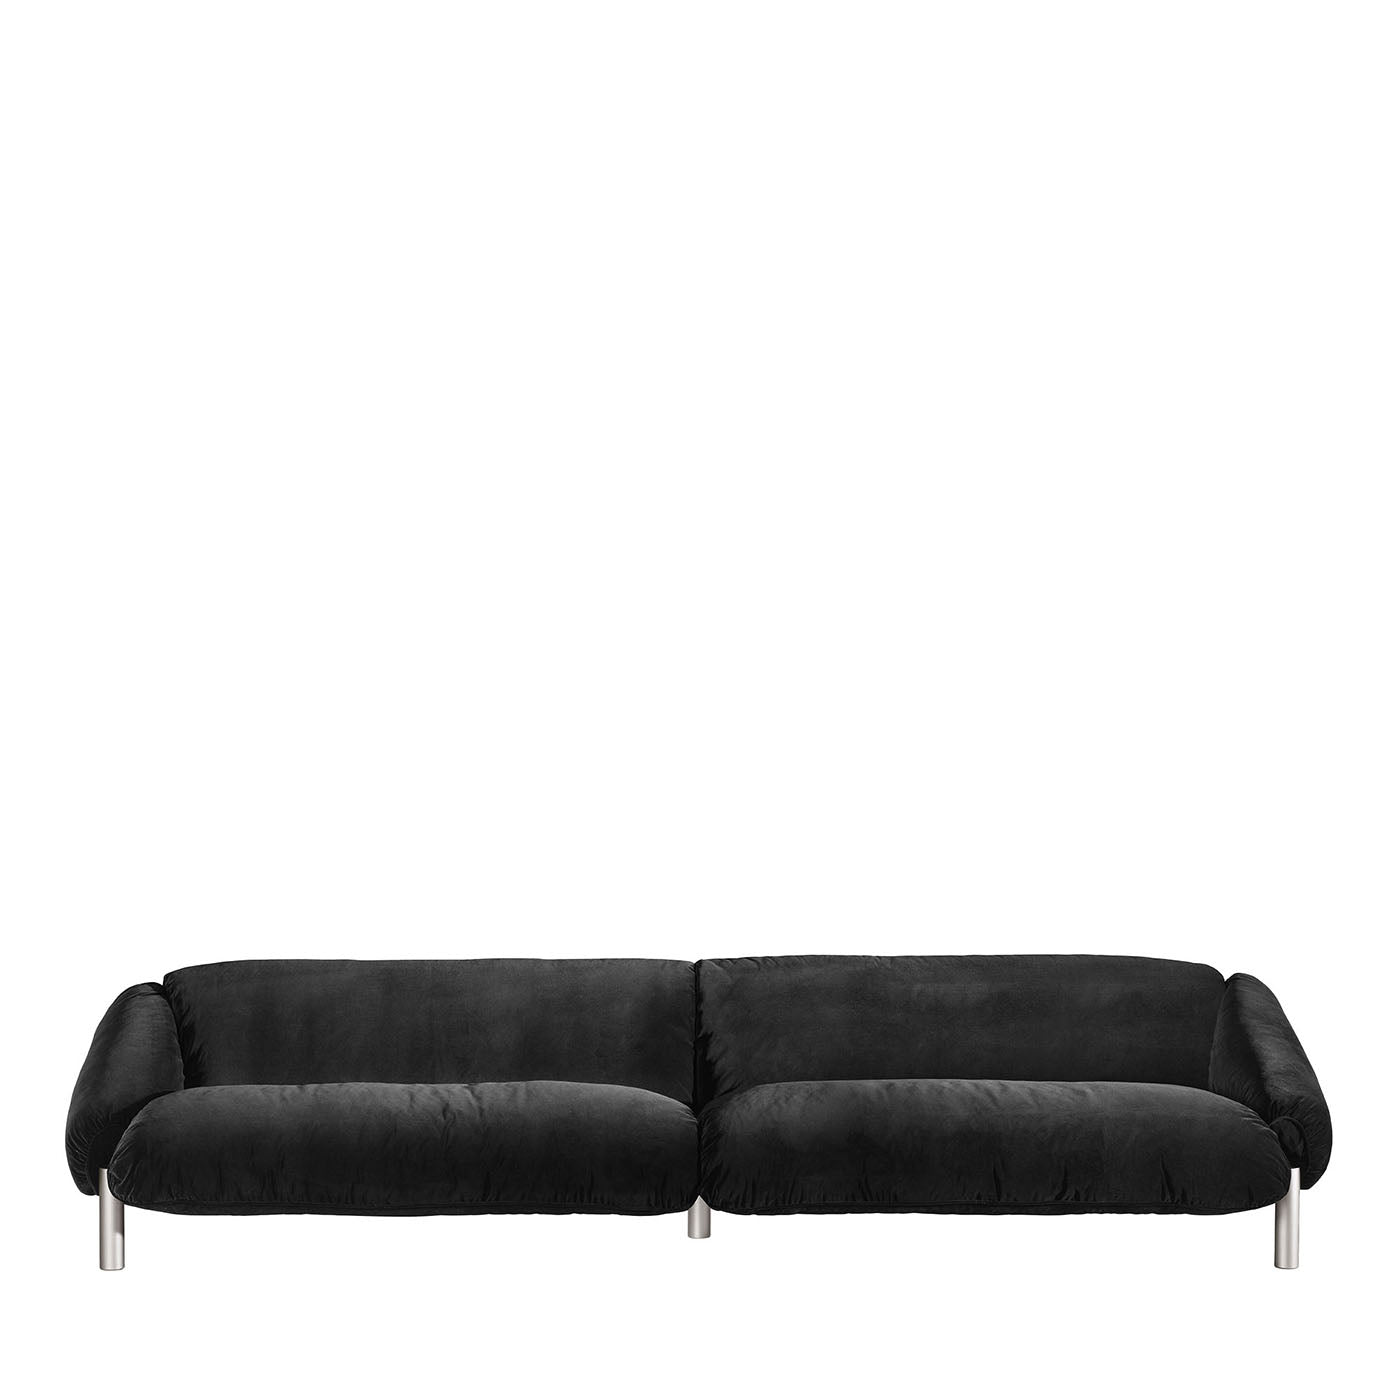 Flo 4-Seater Black Fabric Sofa by Lorenza Bozzoli - Main view